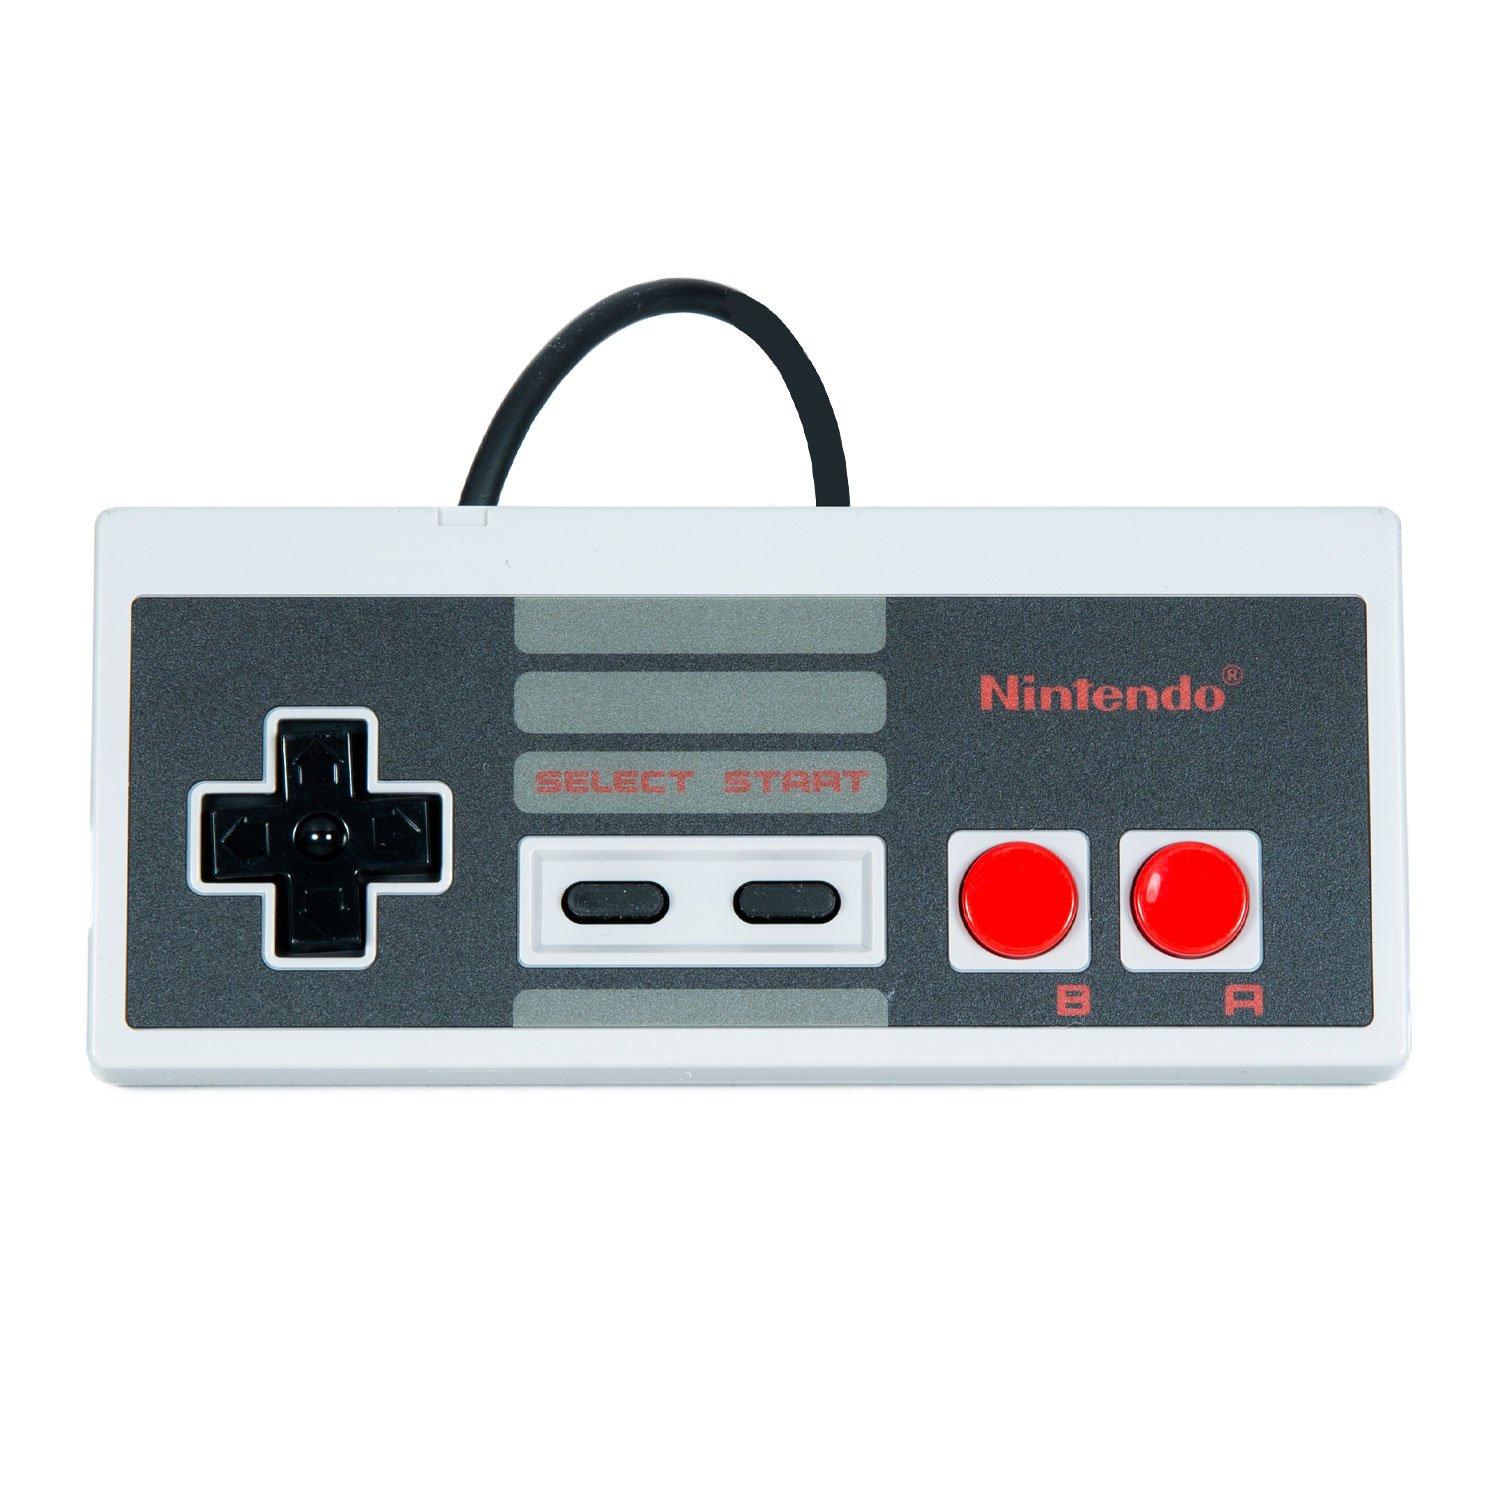 Nintendo Entertainment System: NES Classic Edition US Version